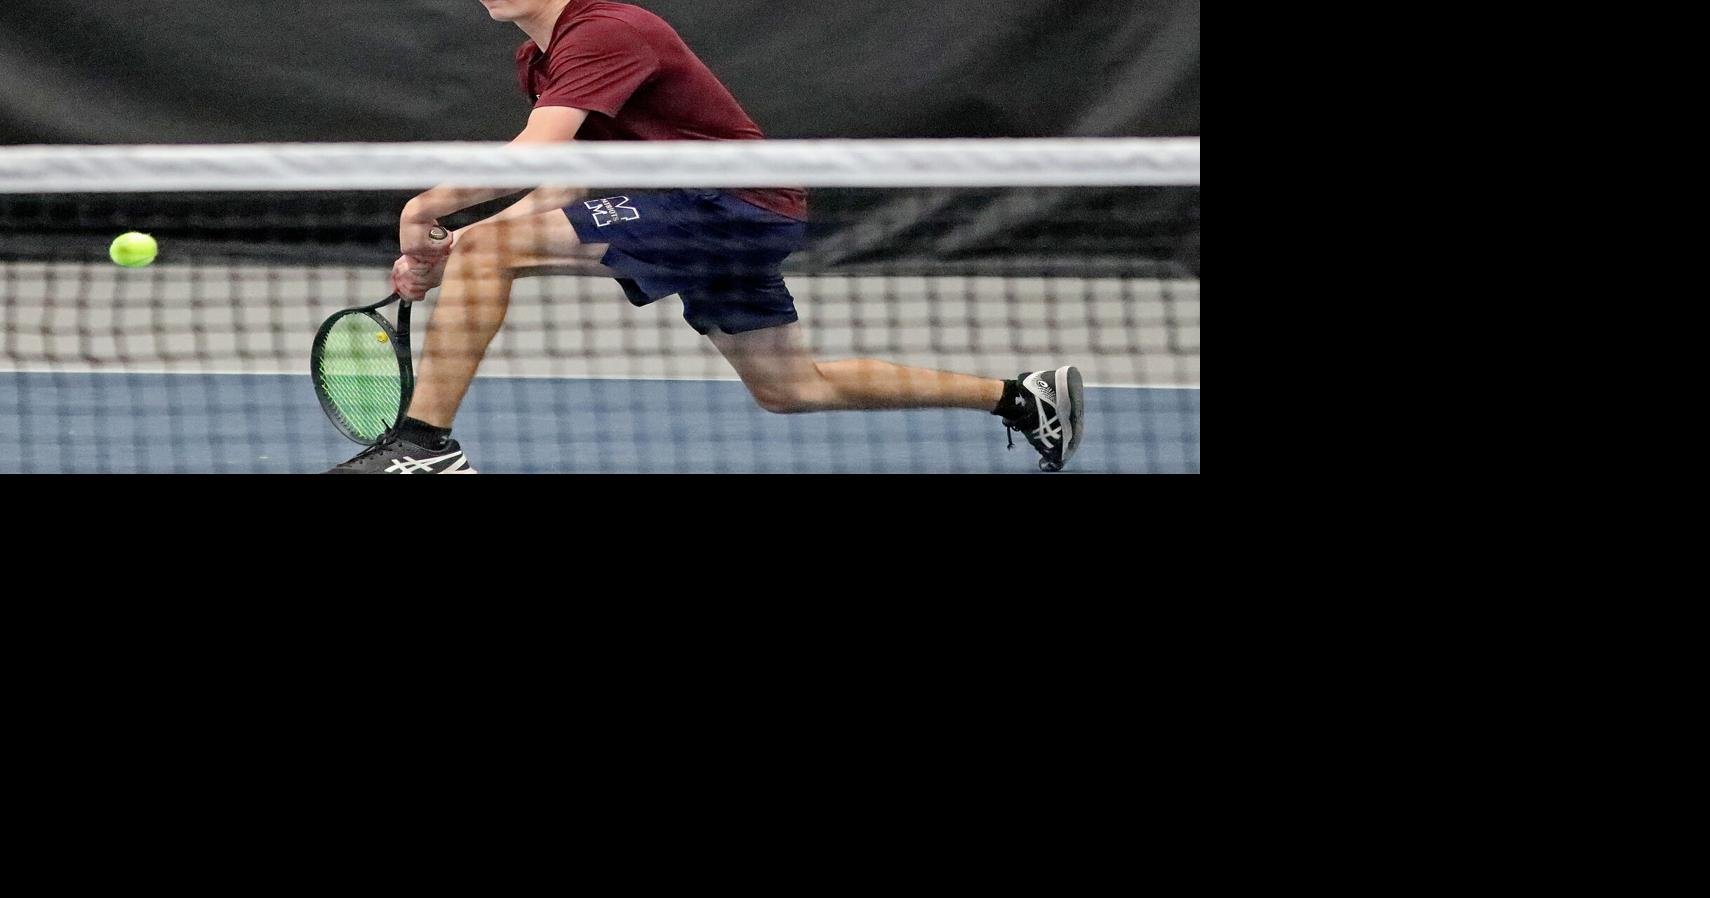 Madison County Players Shine but Fall Short: High School Tennis Recap